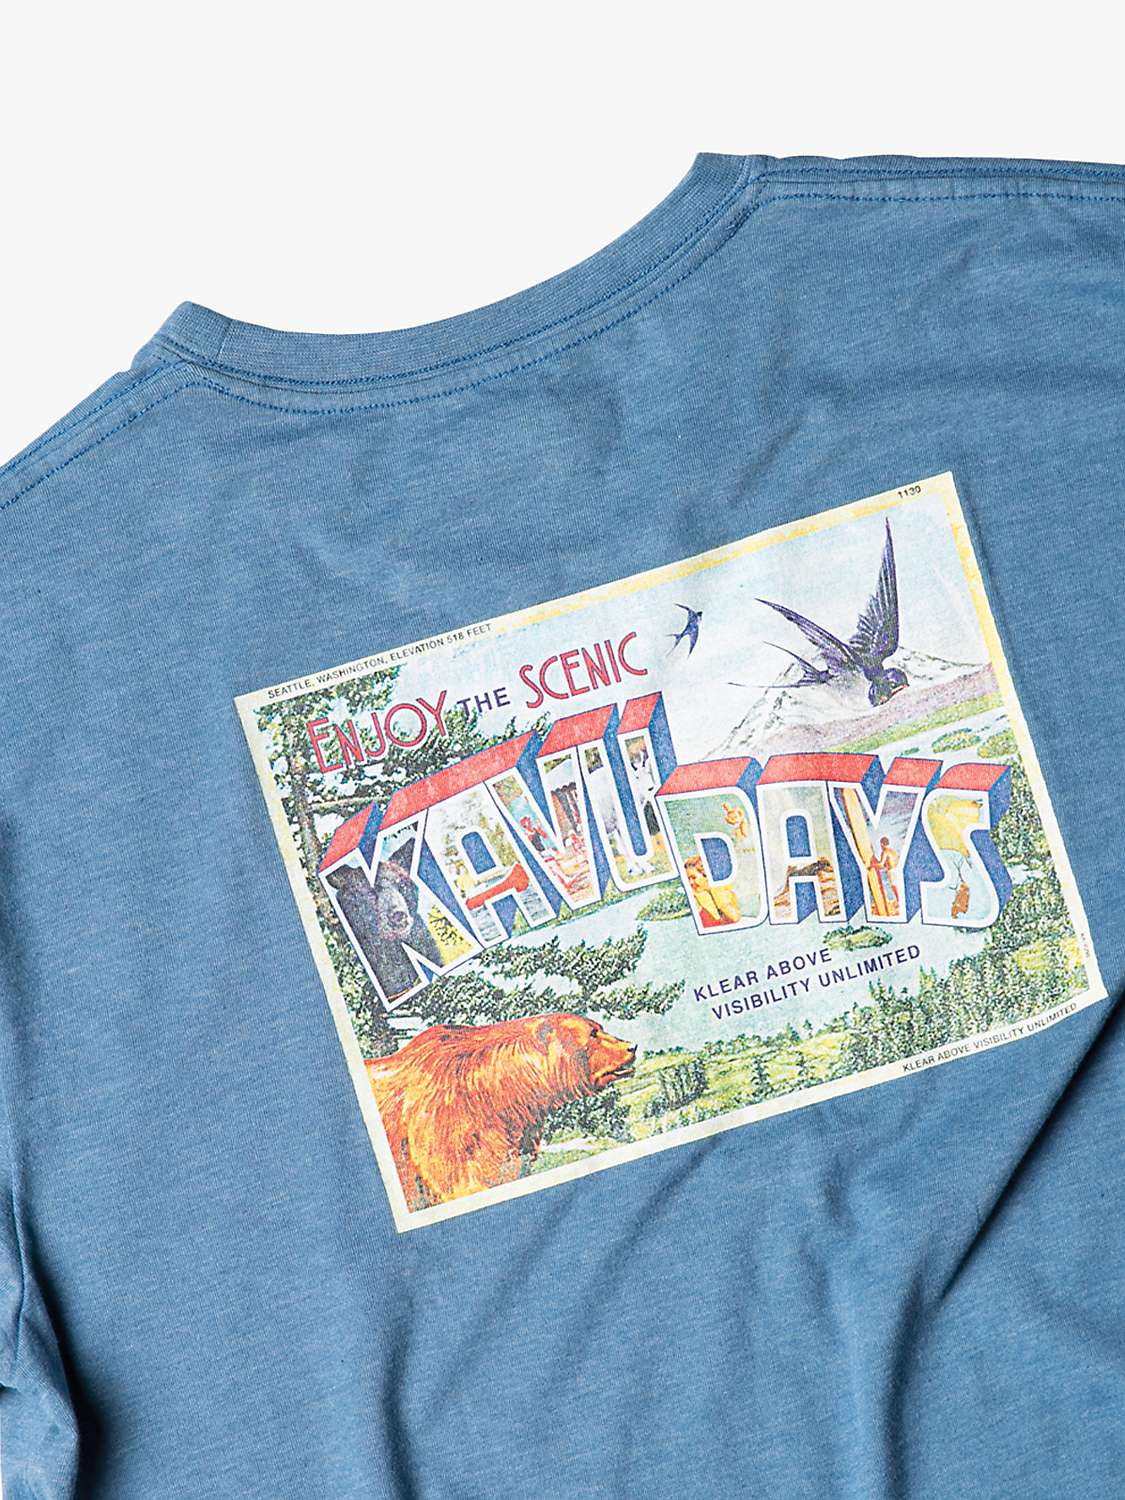 Buy KAVU Post Out T-Shirt, Steel Blue Online at johnlewis.com